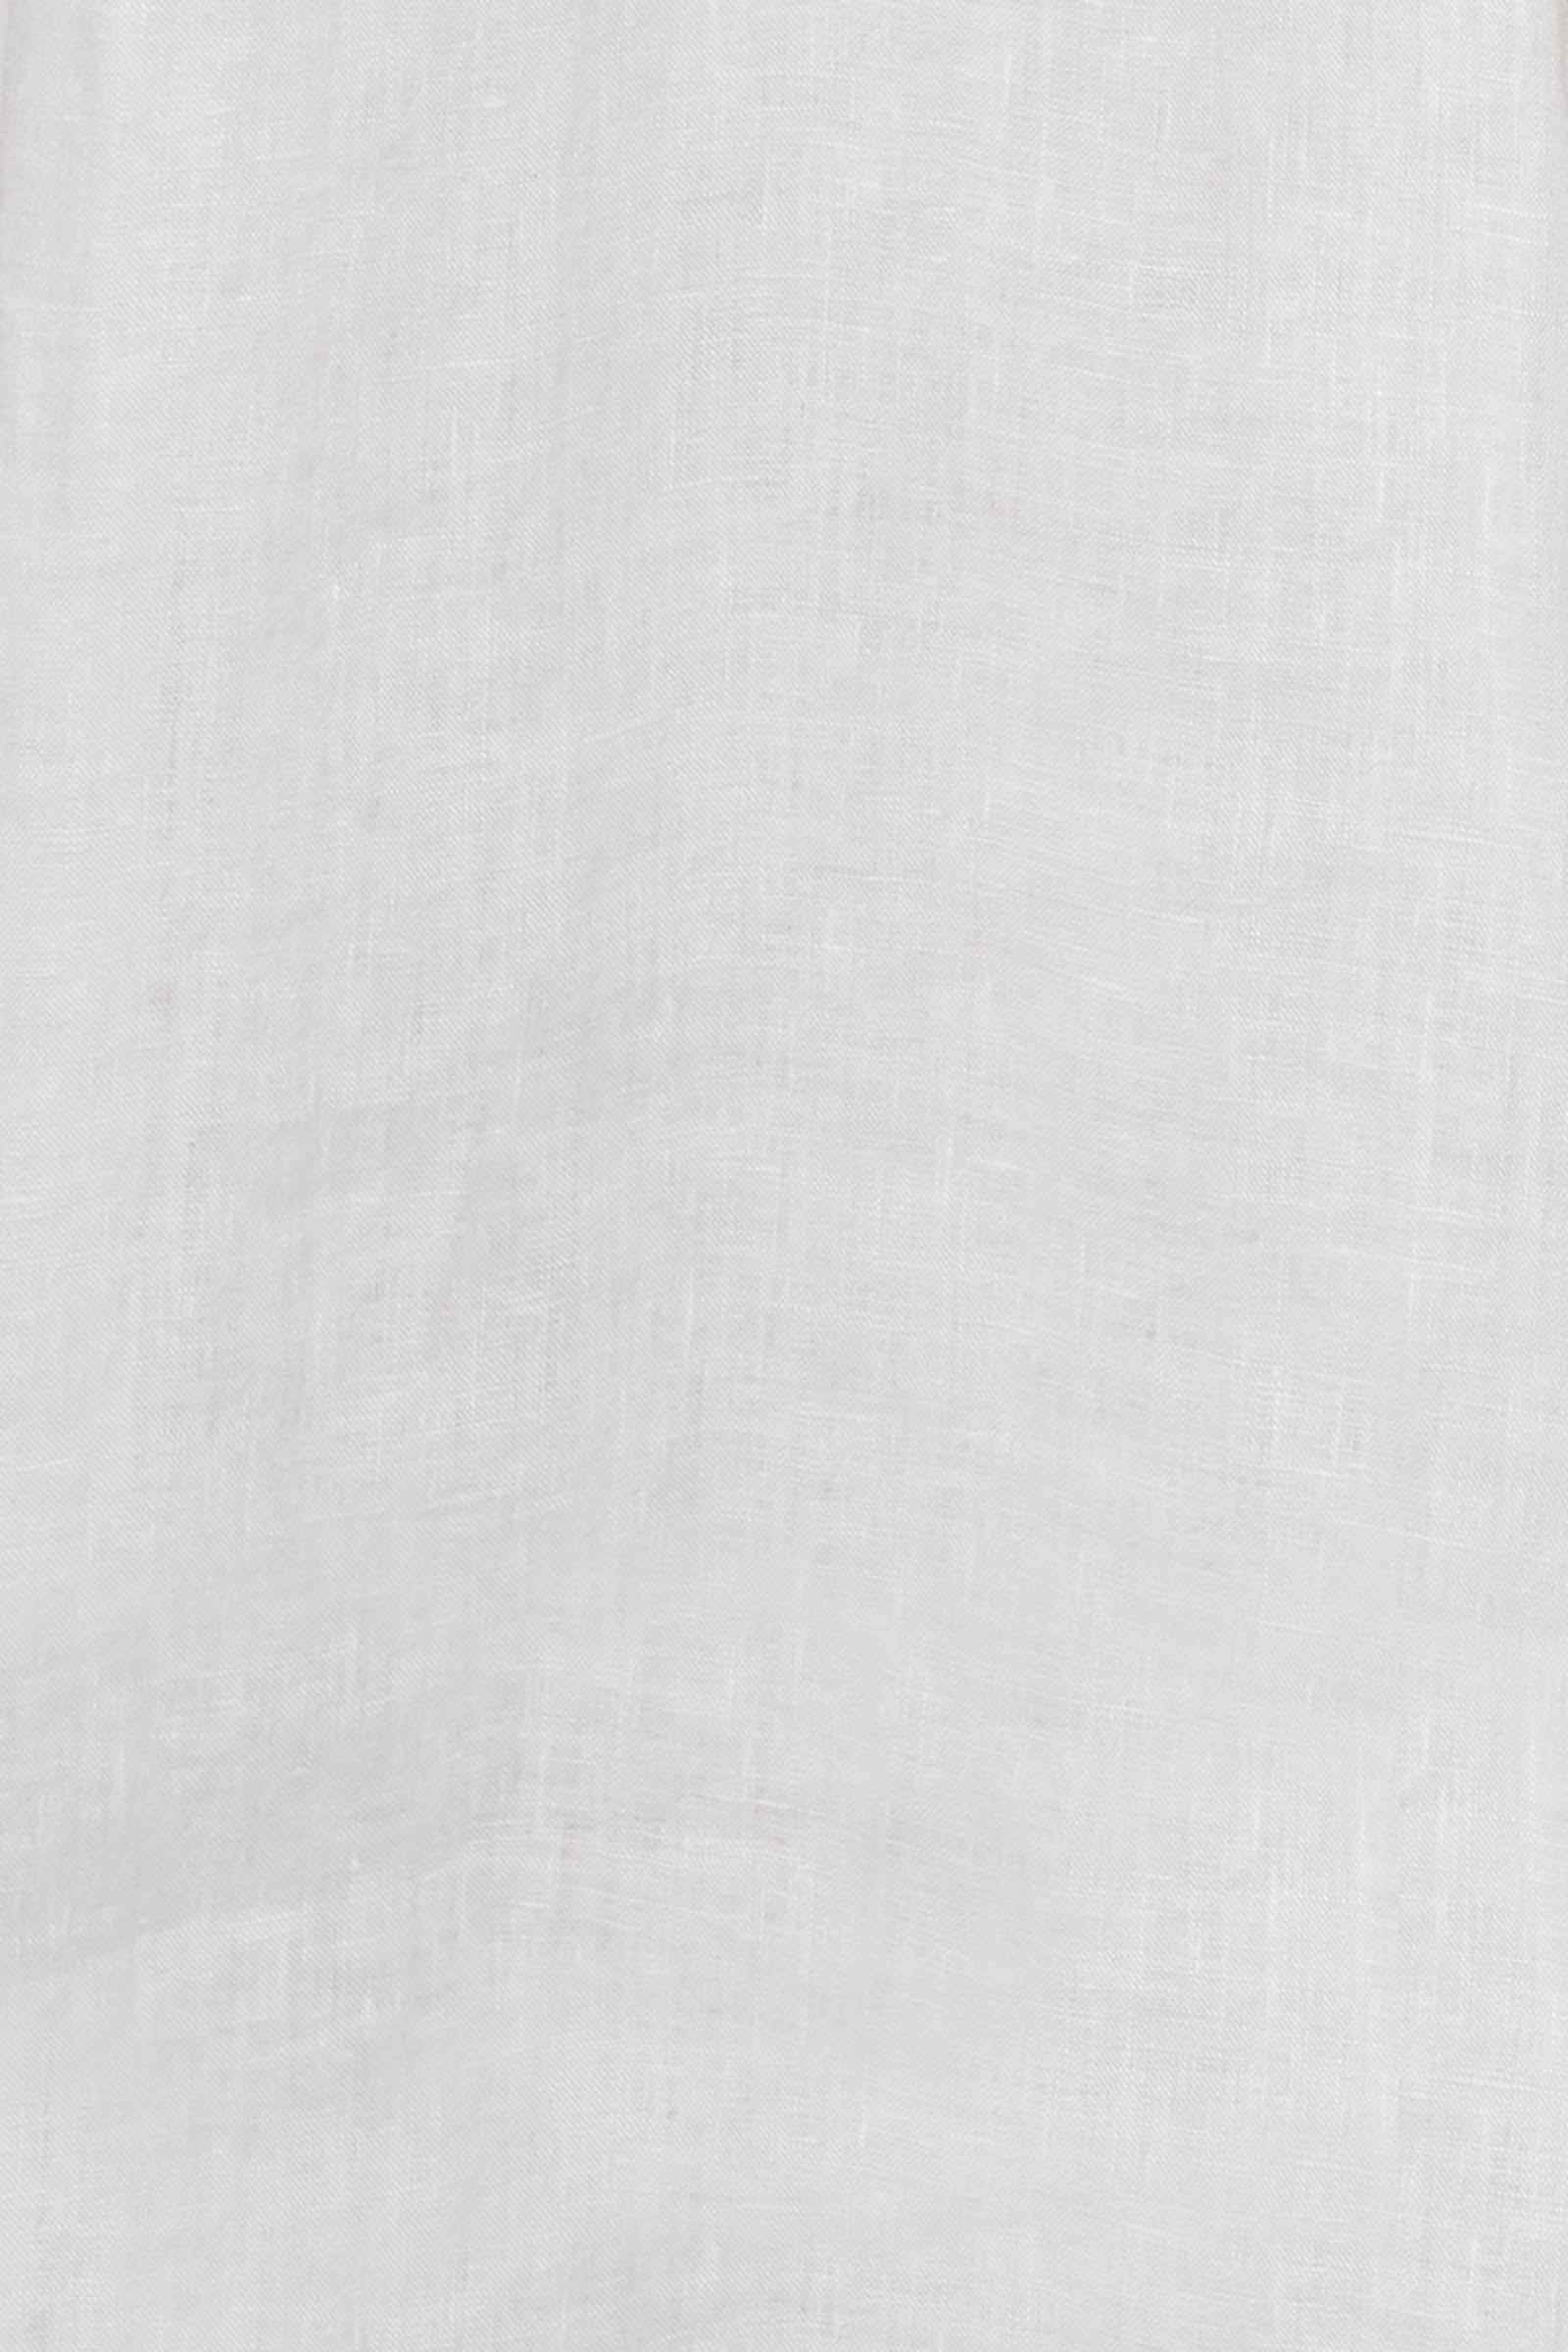 La Vie Dress - Blanc - eb&ive Clothing - Dress Mini Linen